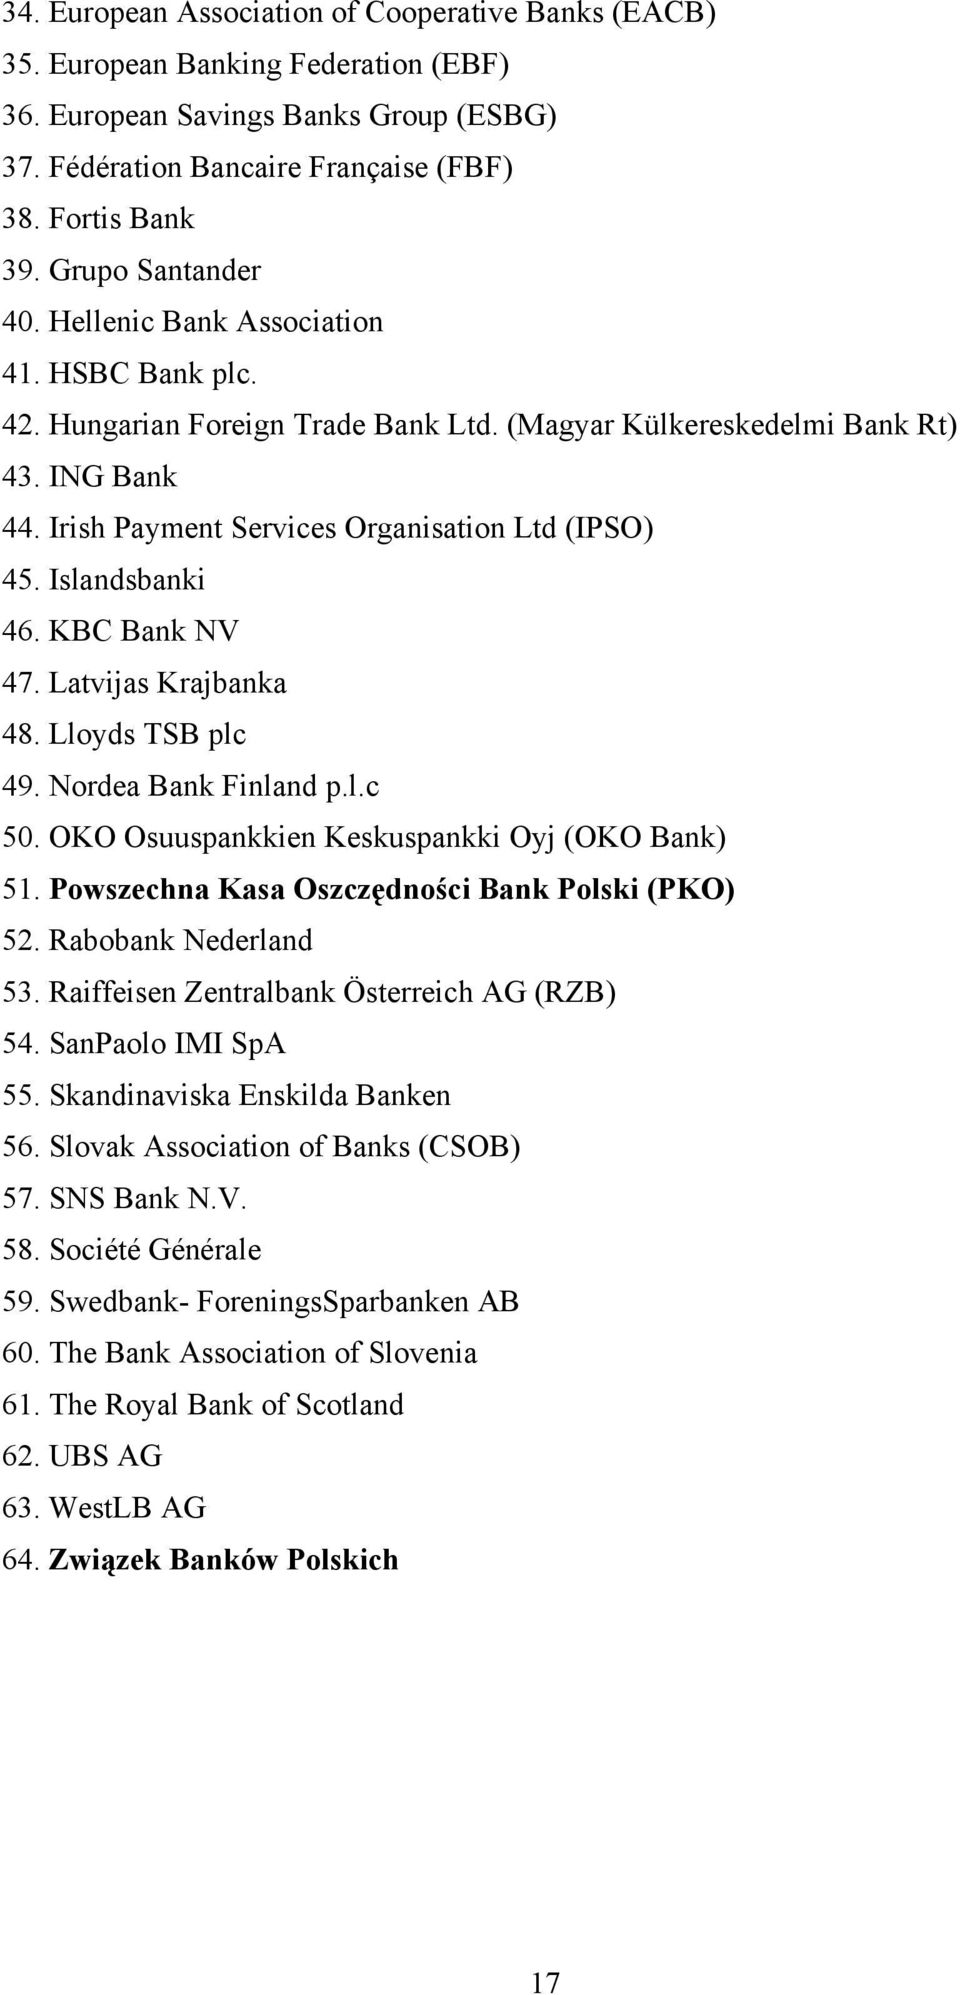 Irish Payment Services Organisation Ltd (IPSO) 45. Islandsbanki 46. KBC Bank NV 47. Latvijas Krajbanka 48. Lloyds TSB plc 49. Nordea Bank Finland p.l.c 50.